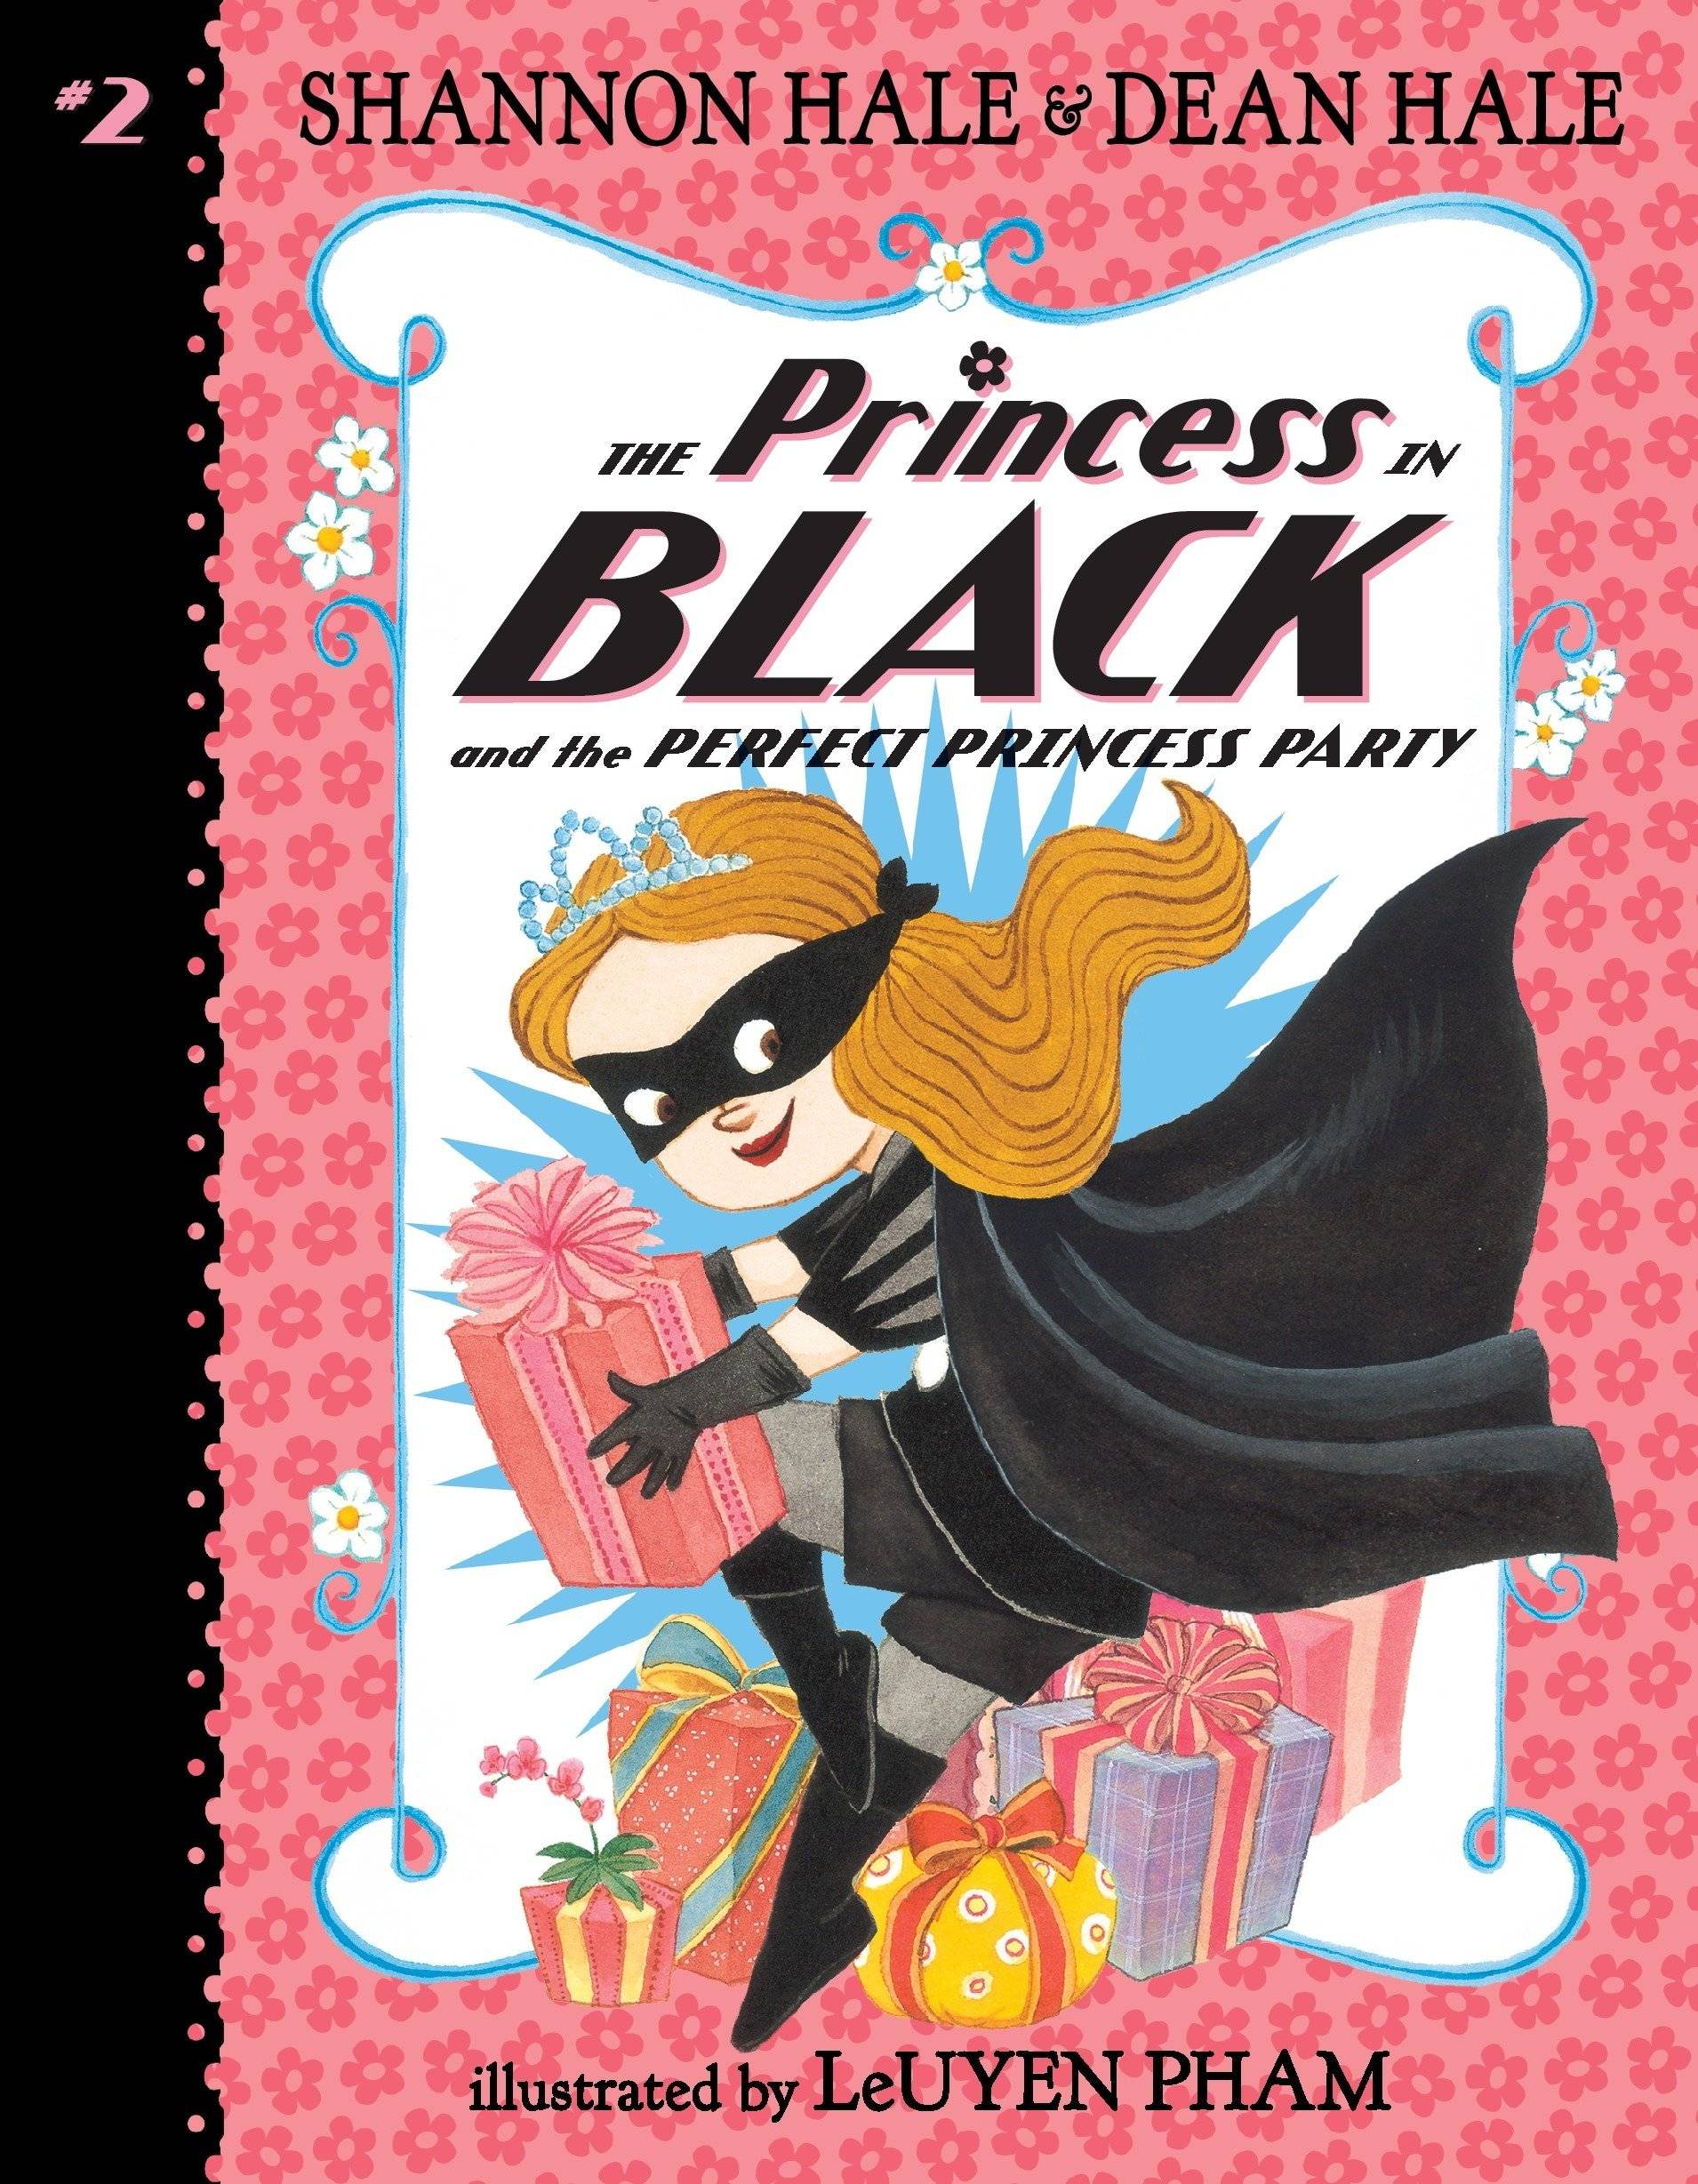 IMG : The Princess In Black #2